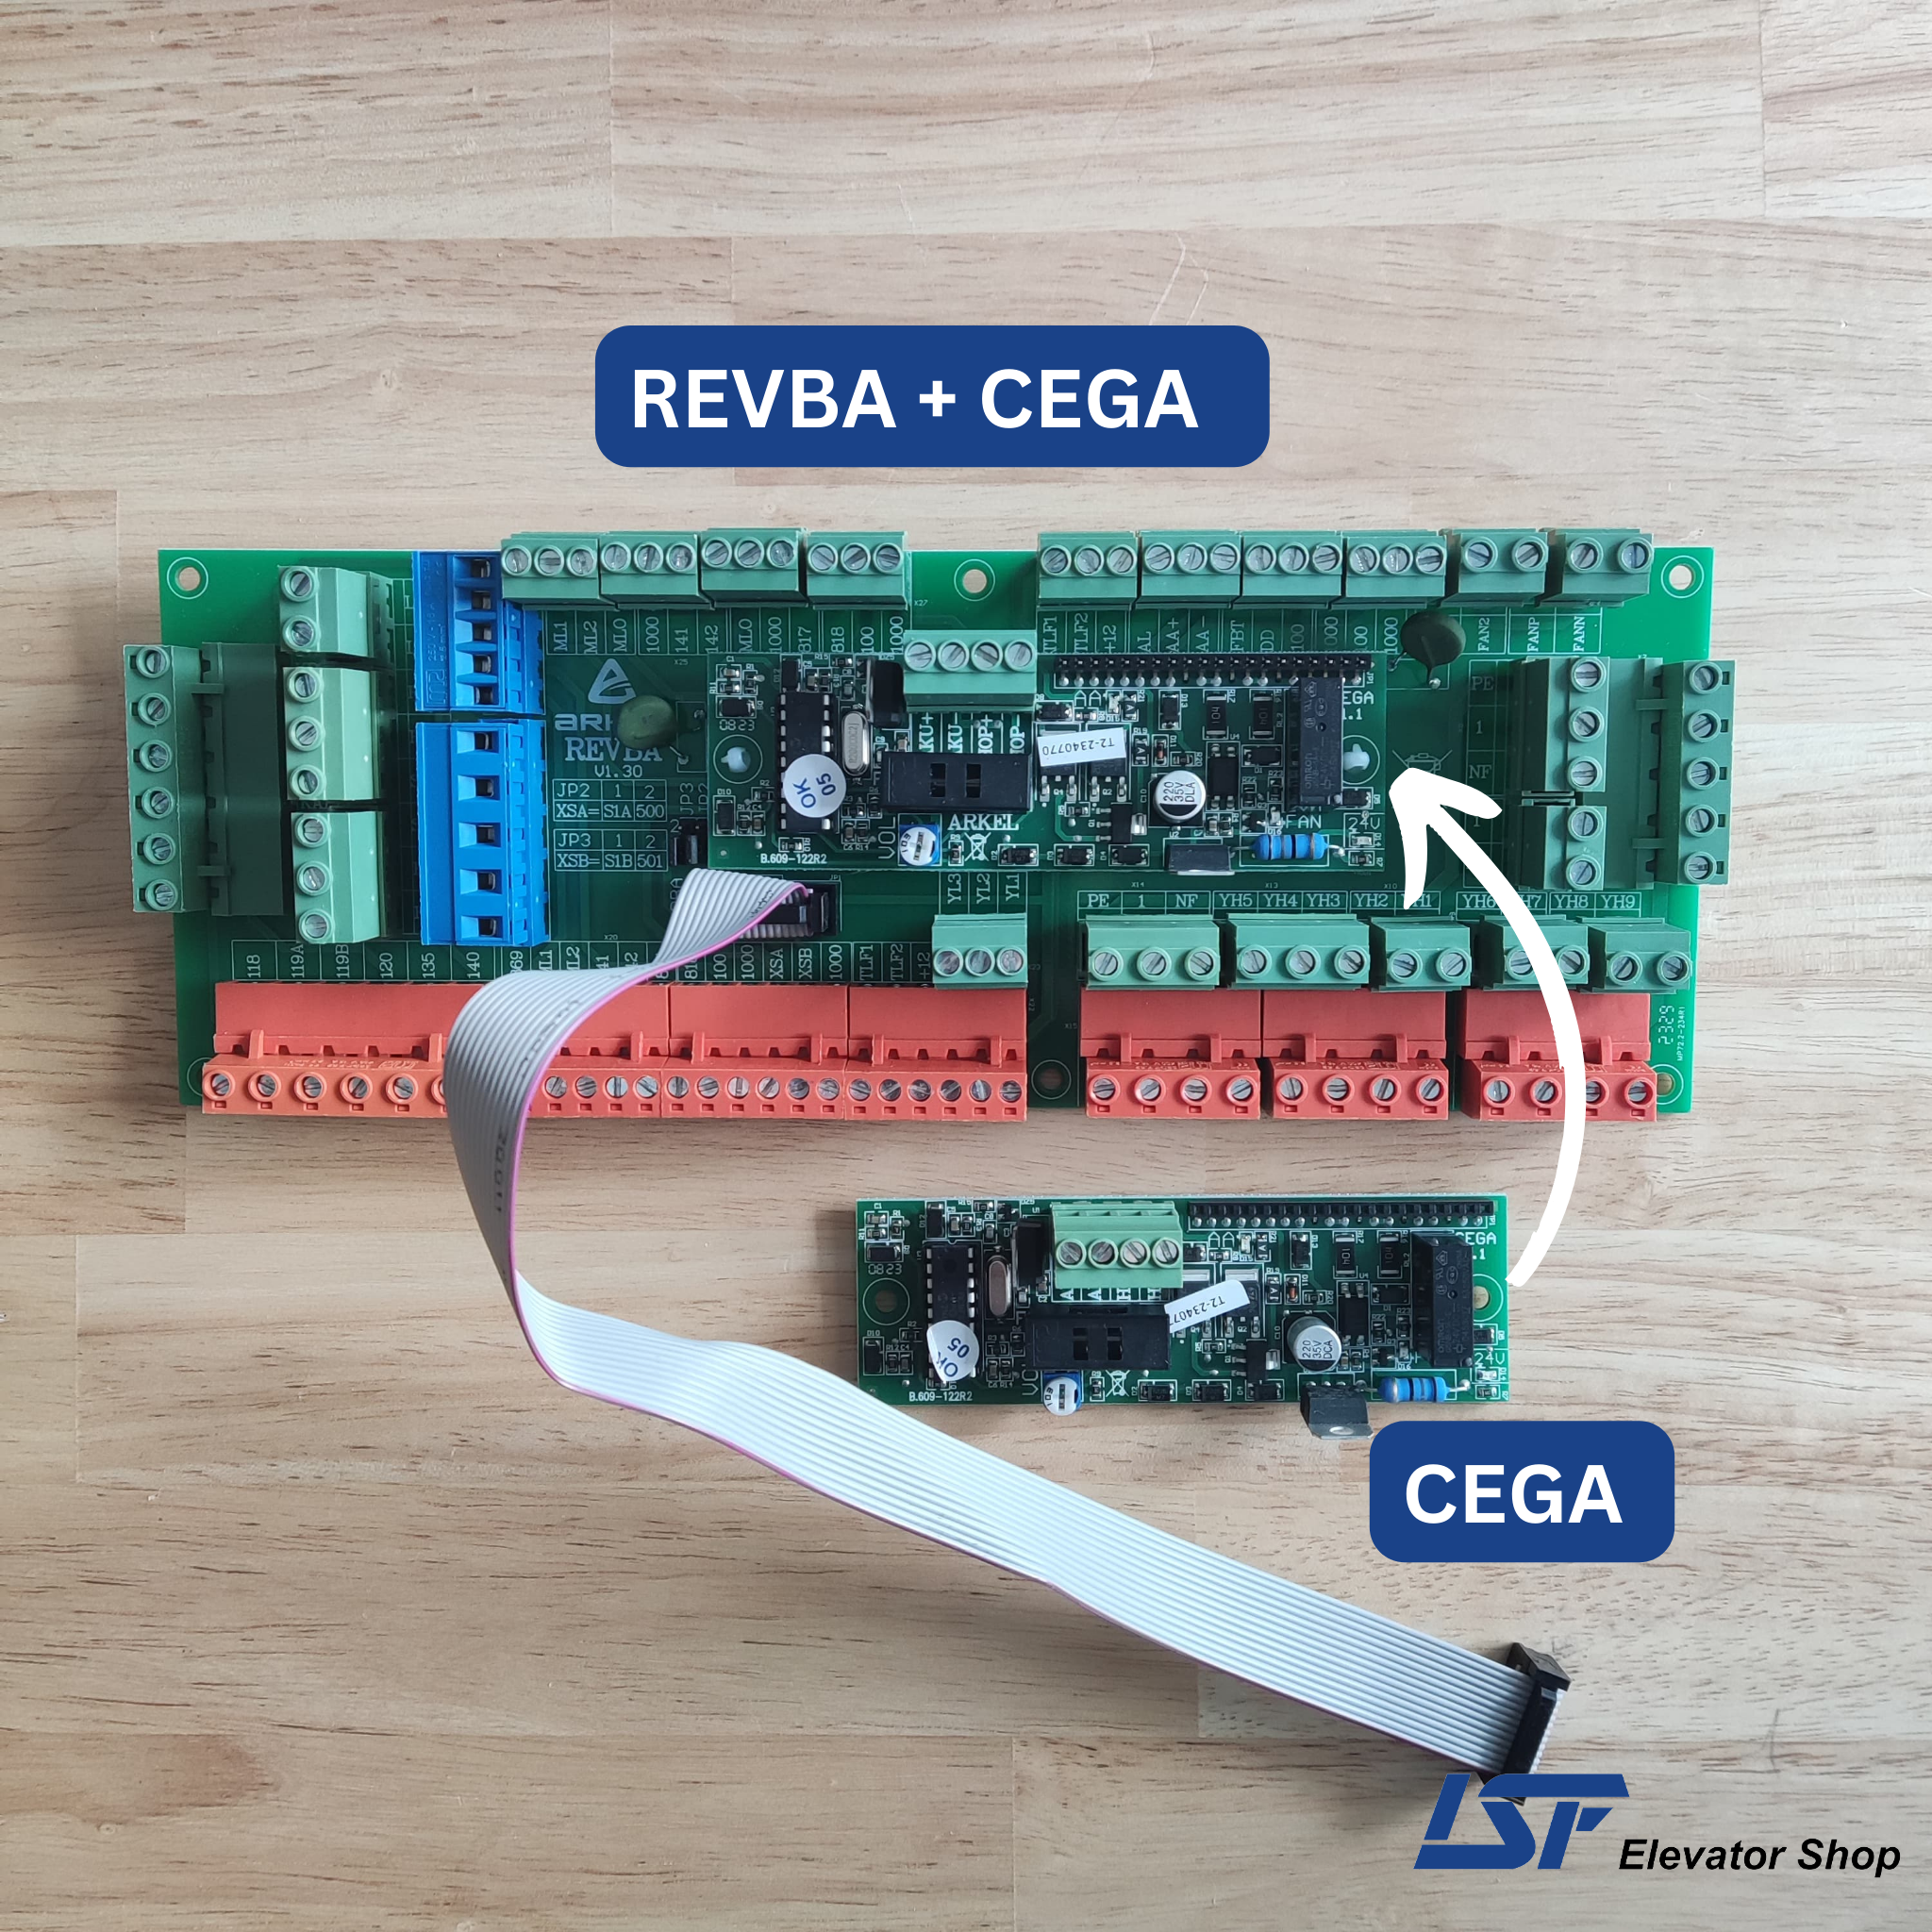 REVBA + CEGA Arkel Control Cart for Elevator Systems